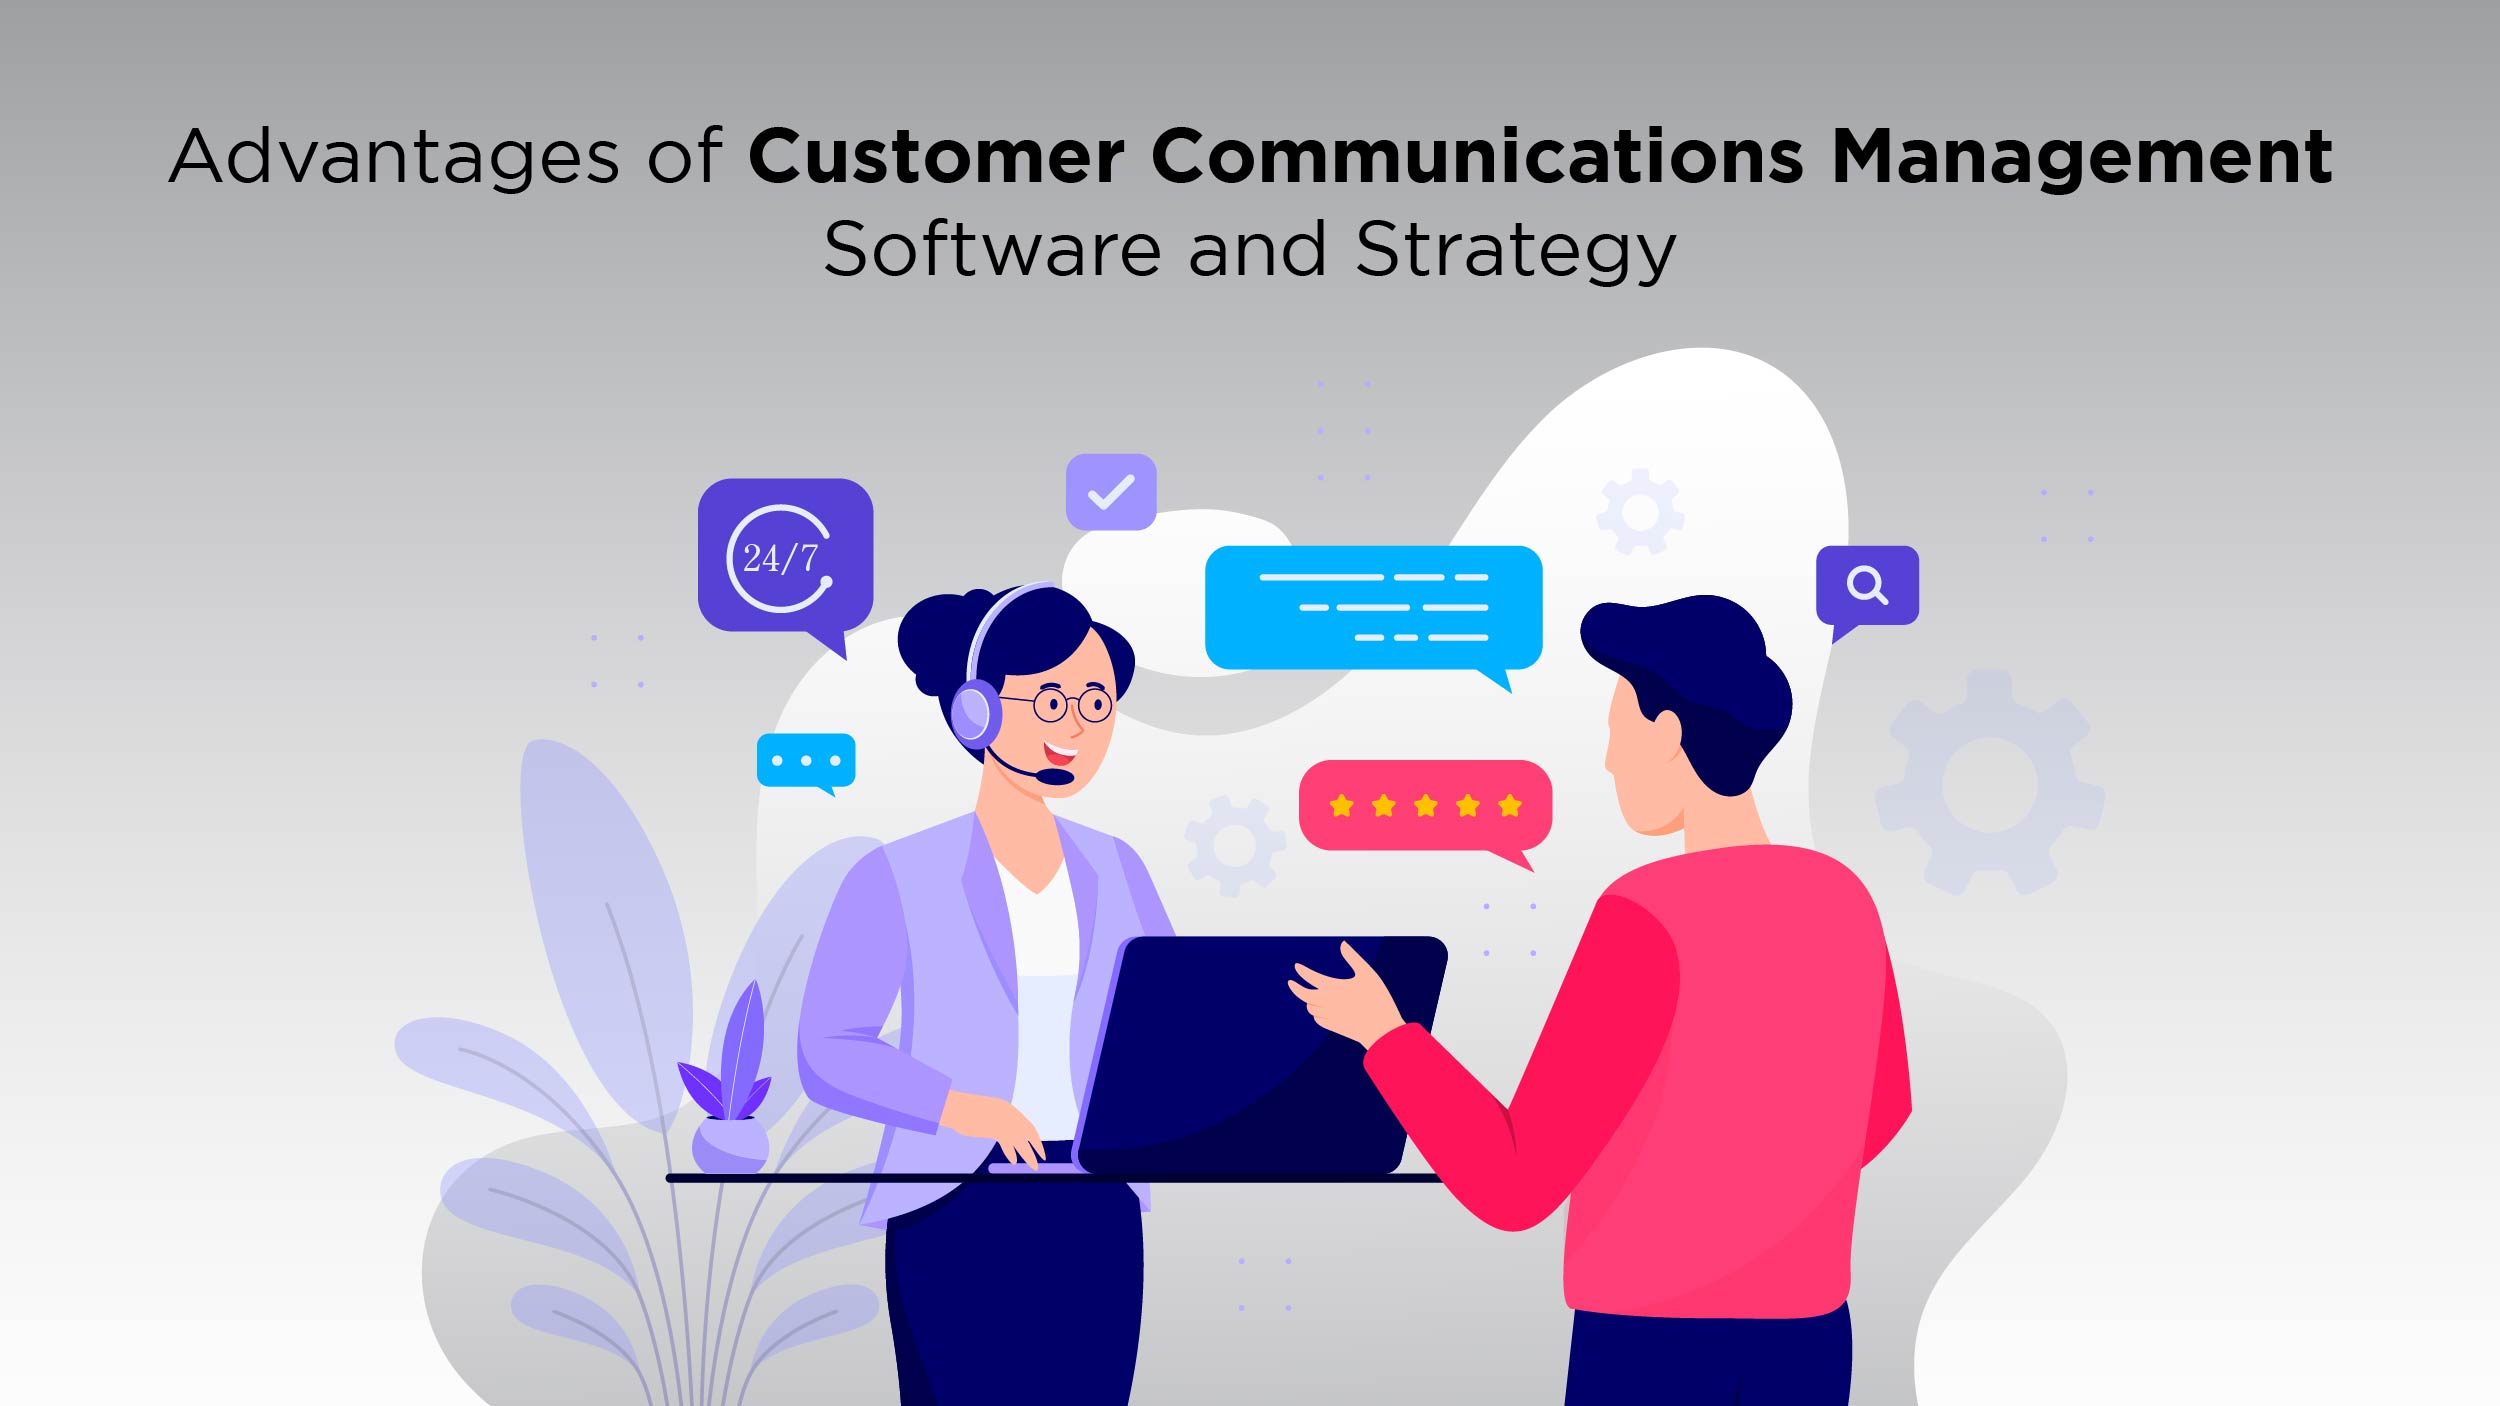 Customer Communications Management